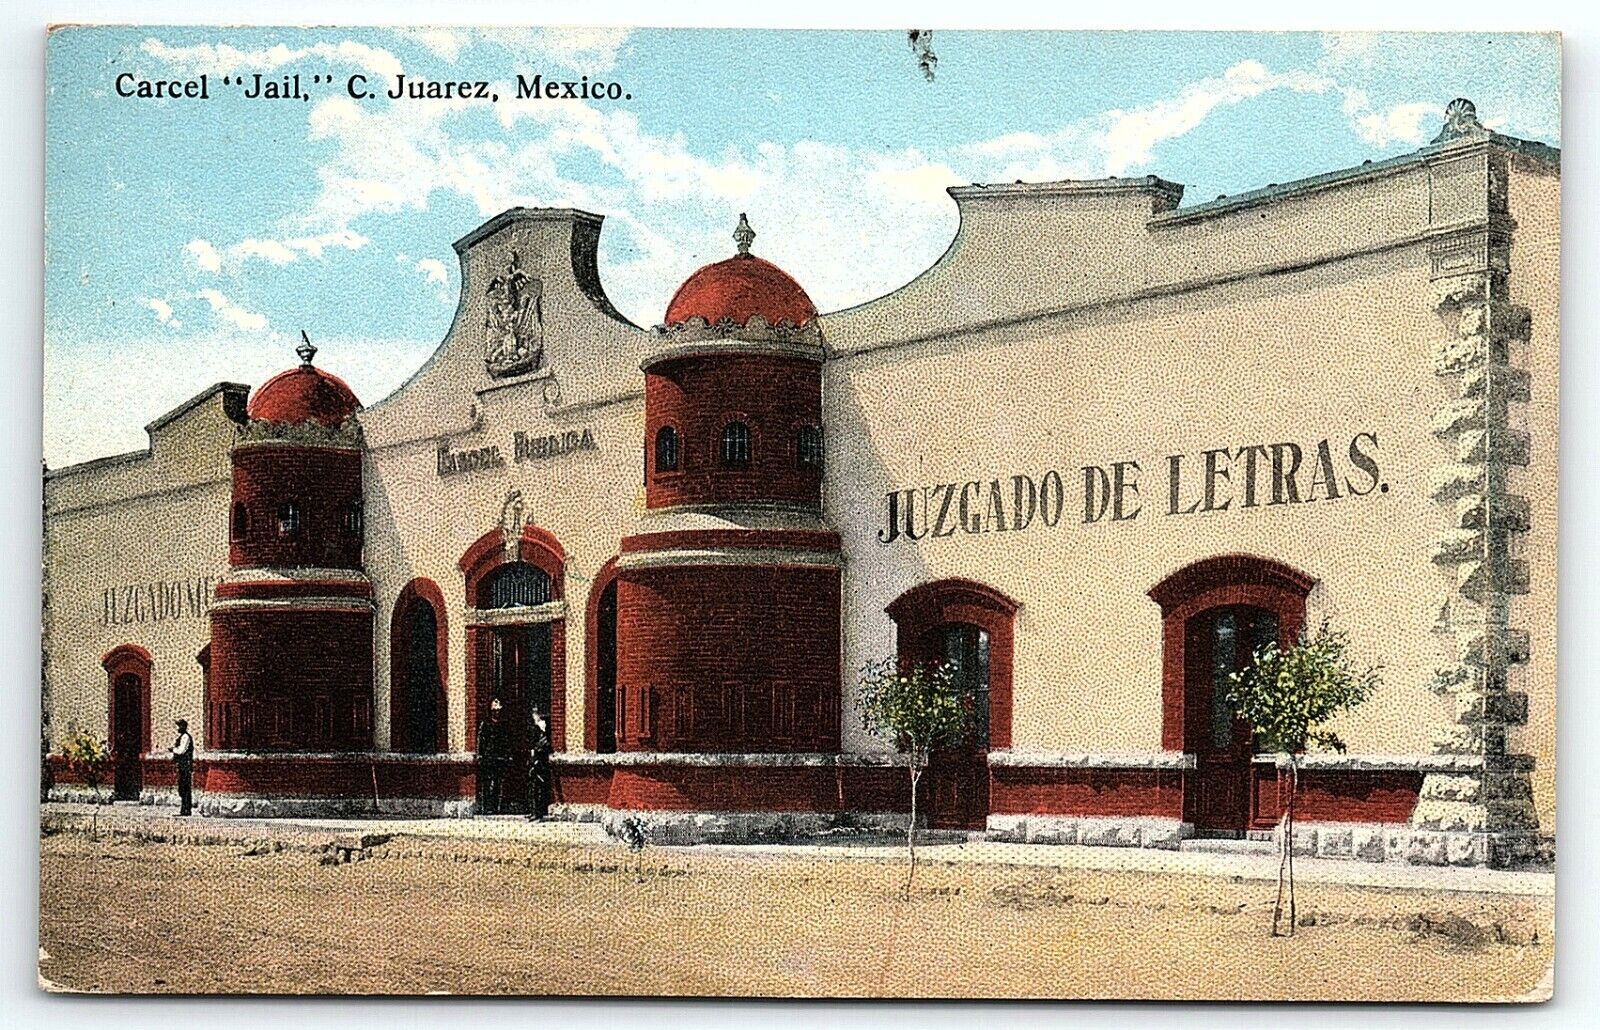 1922 CARCEL JAIL C. JUAREZ MEXICO STREET VIEW ATLANTA GEORGIA POSTCARD P2735